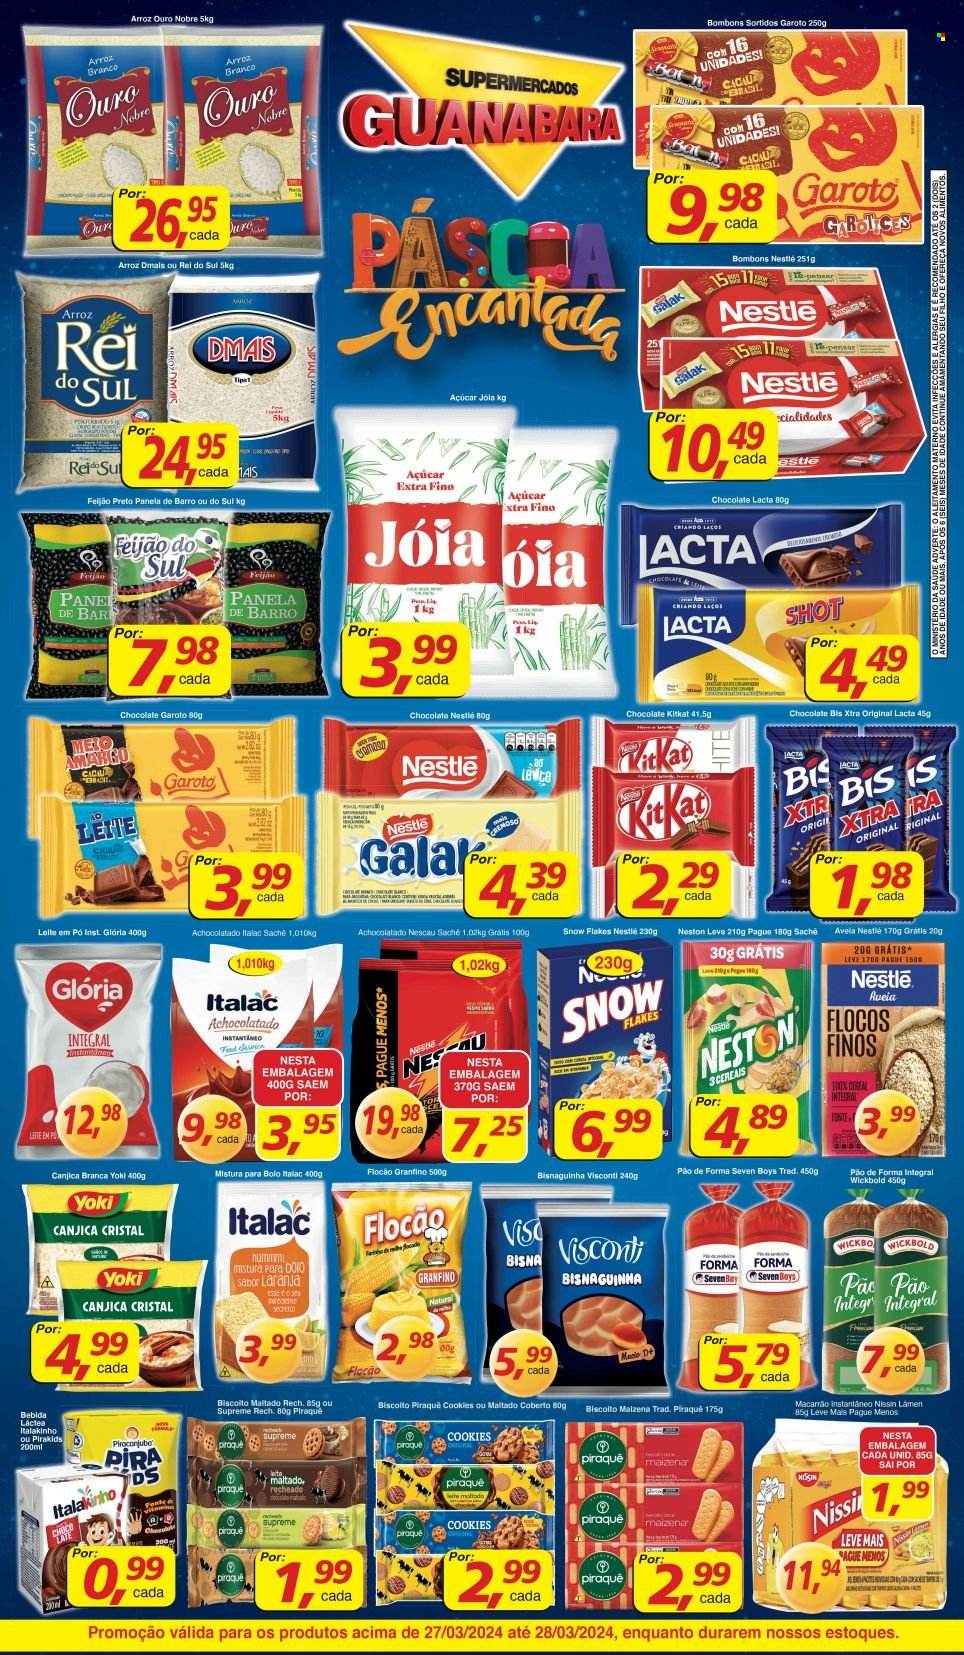 Encarte Supermercados Guanabara  - 27.03.2024 - 28.03.2024.